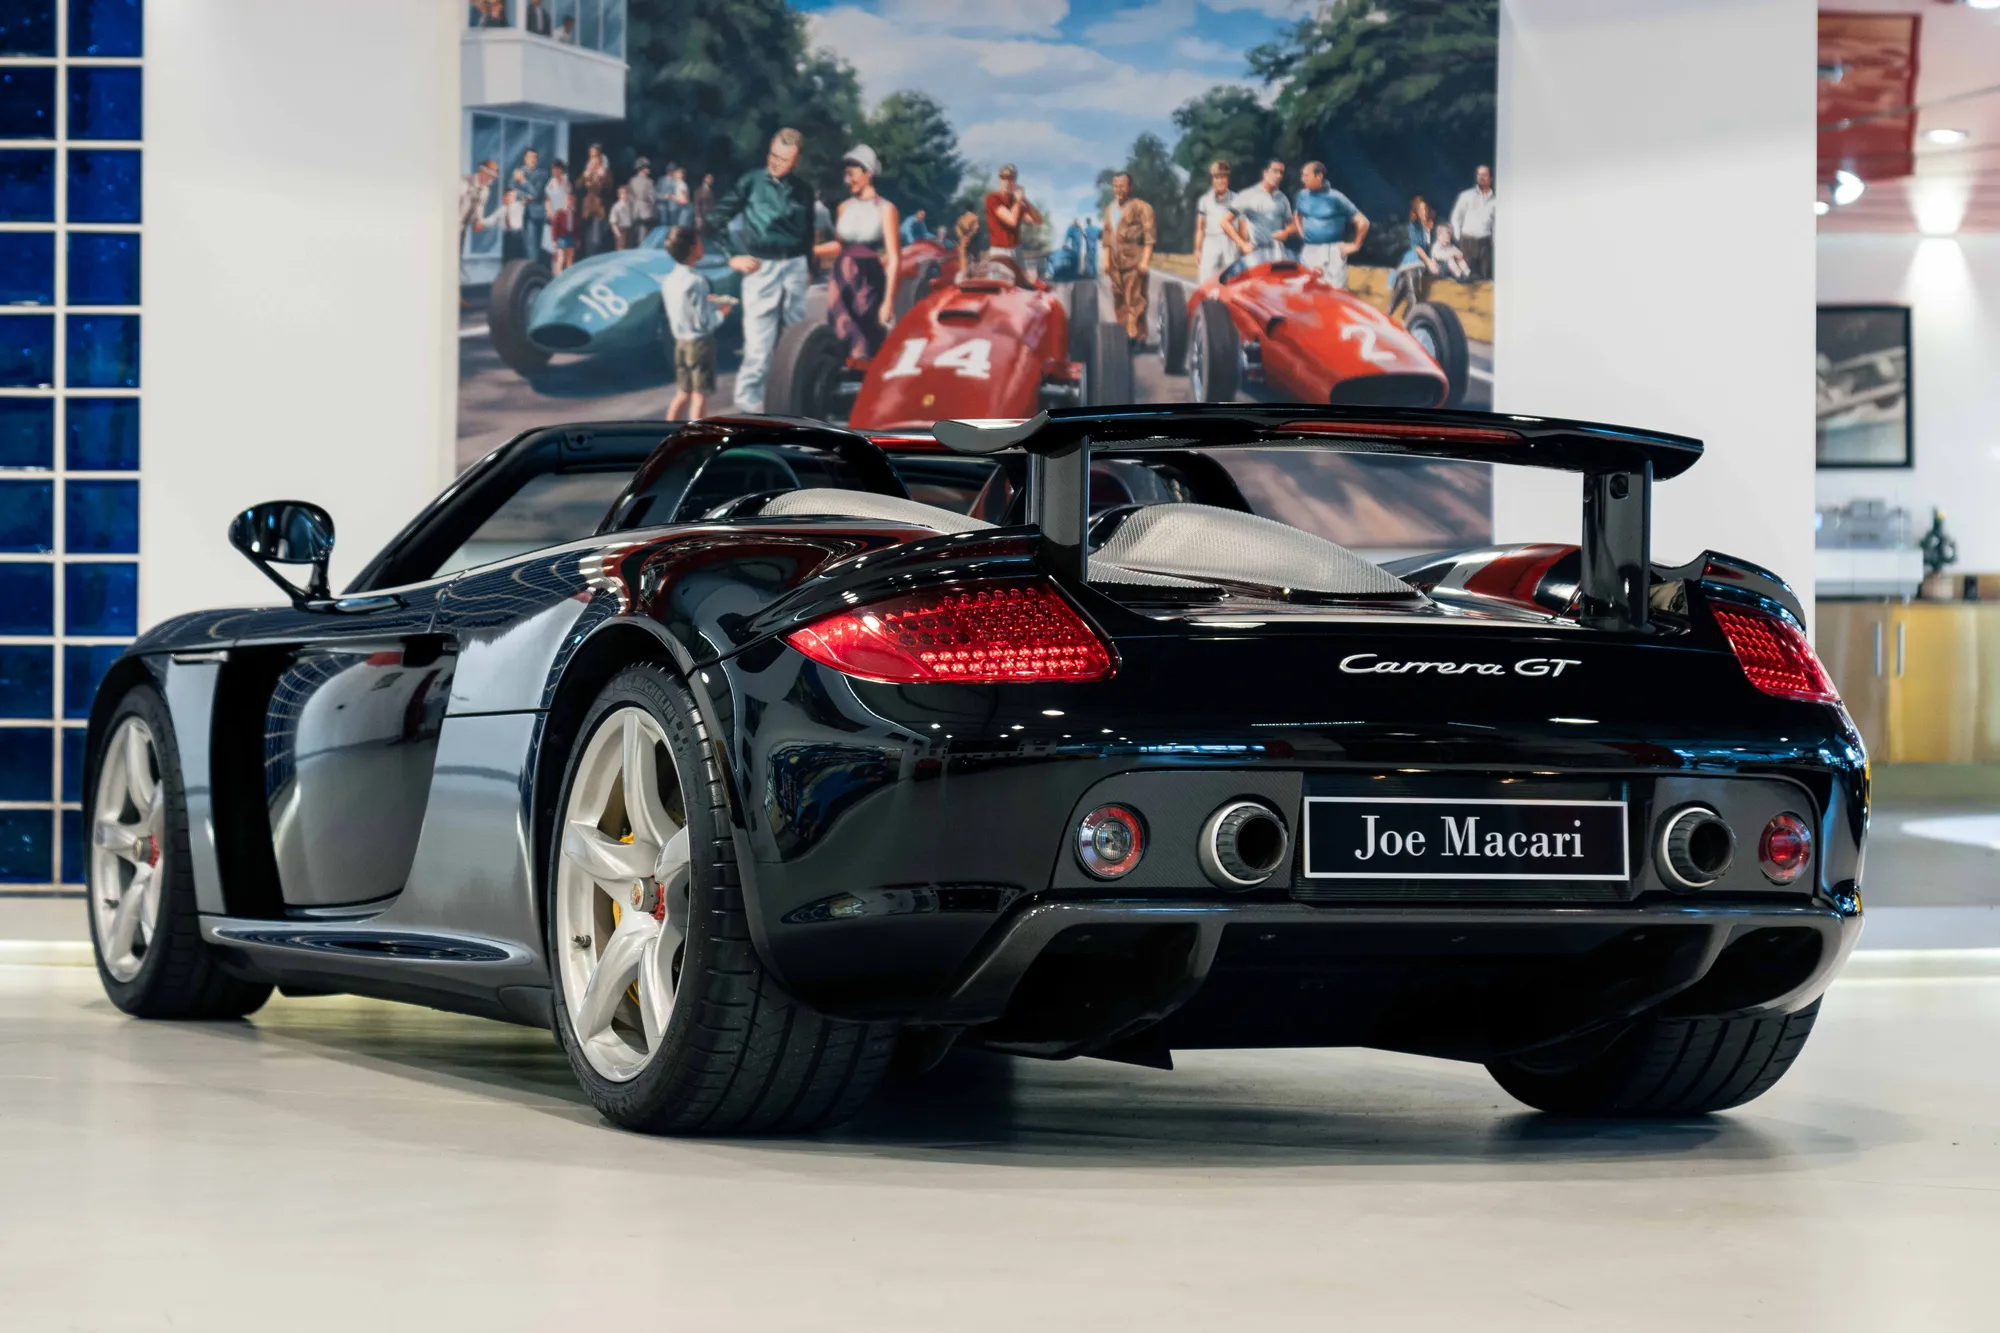 Porsche Carrera GT - Joe Macari - United Kingdom - For sale on LuxuryPulse.